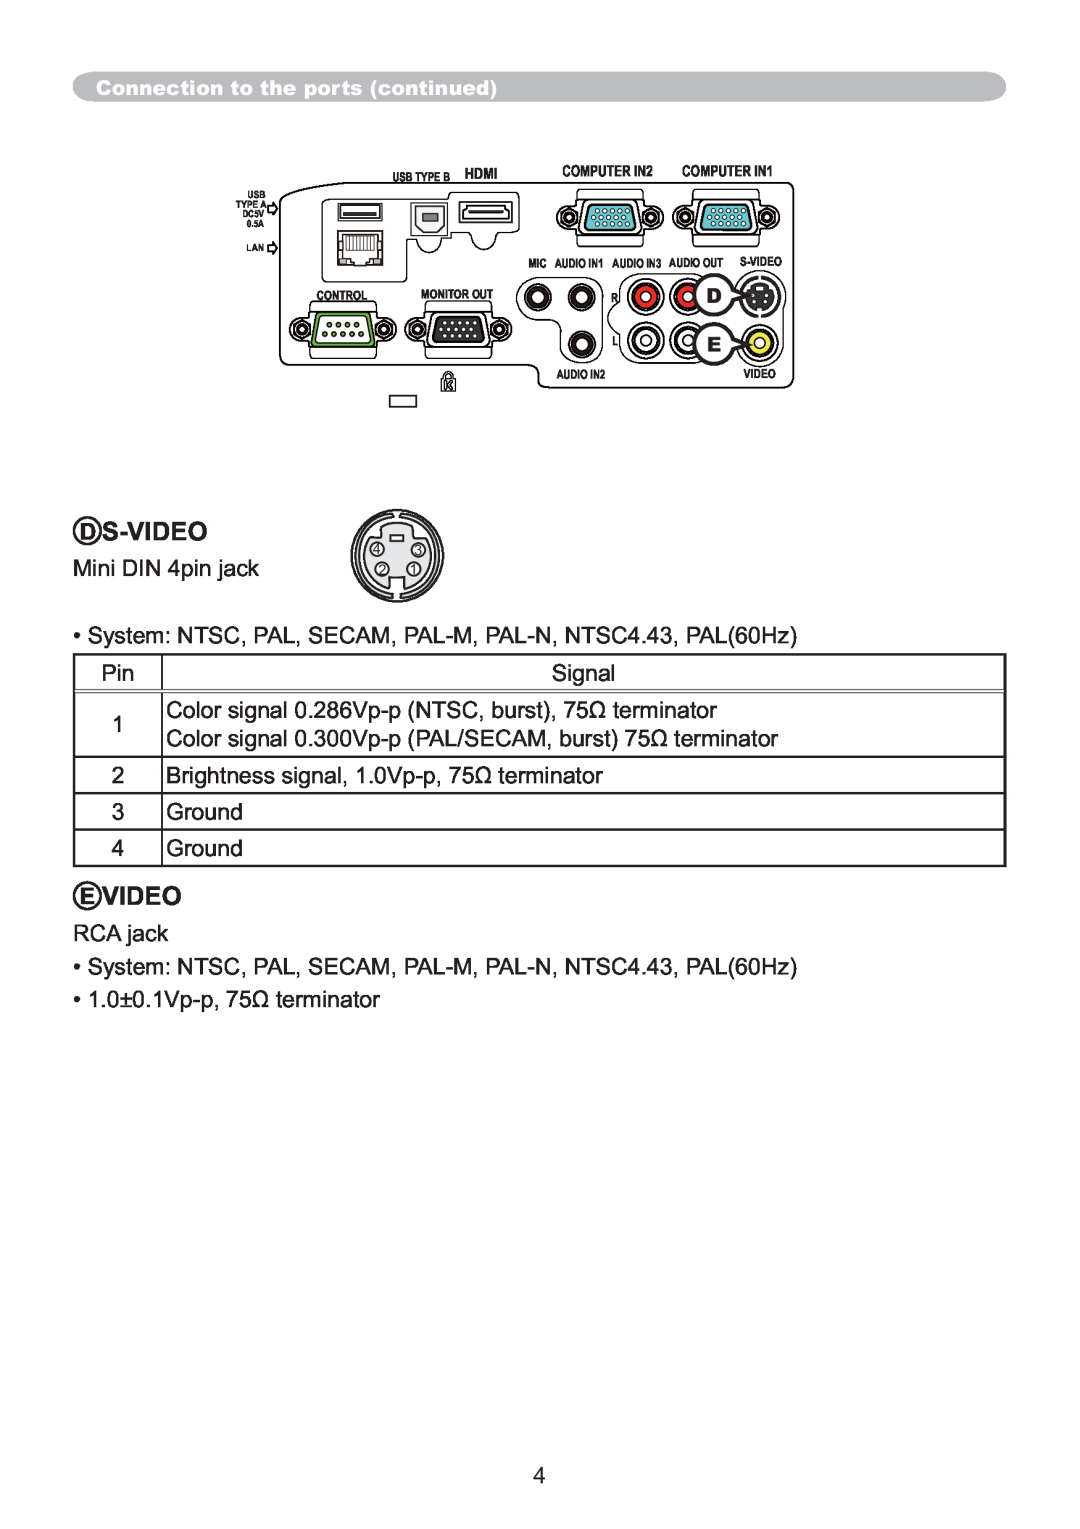 Hitachi IPJ-AW250N user manual D S-Video, E Video 